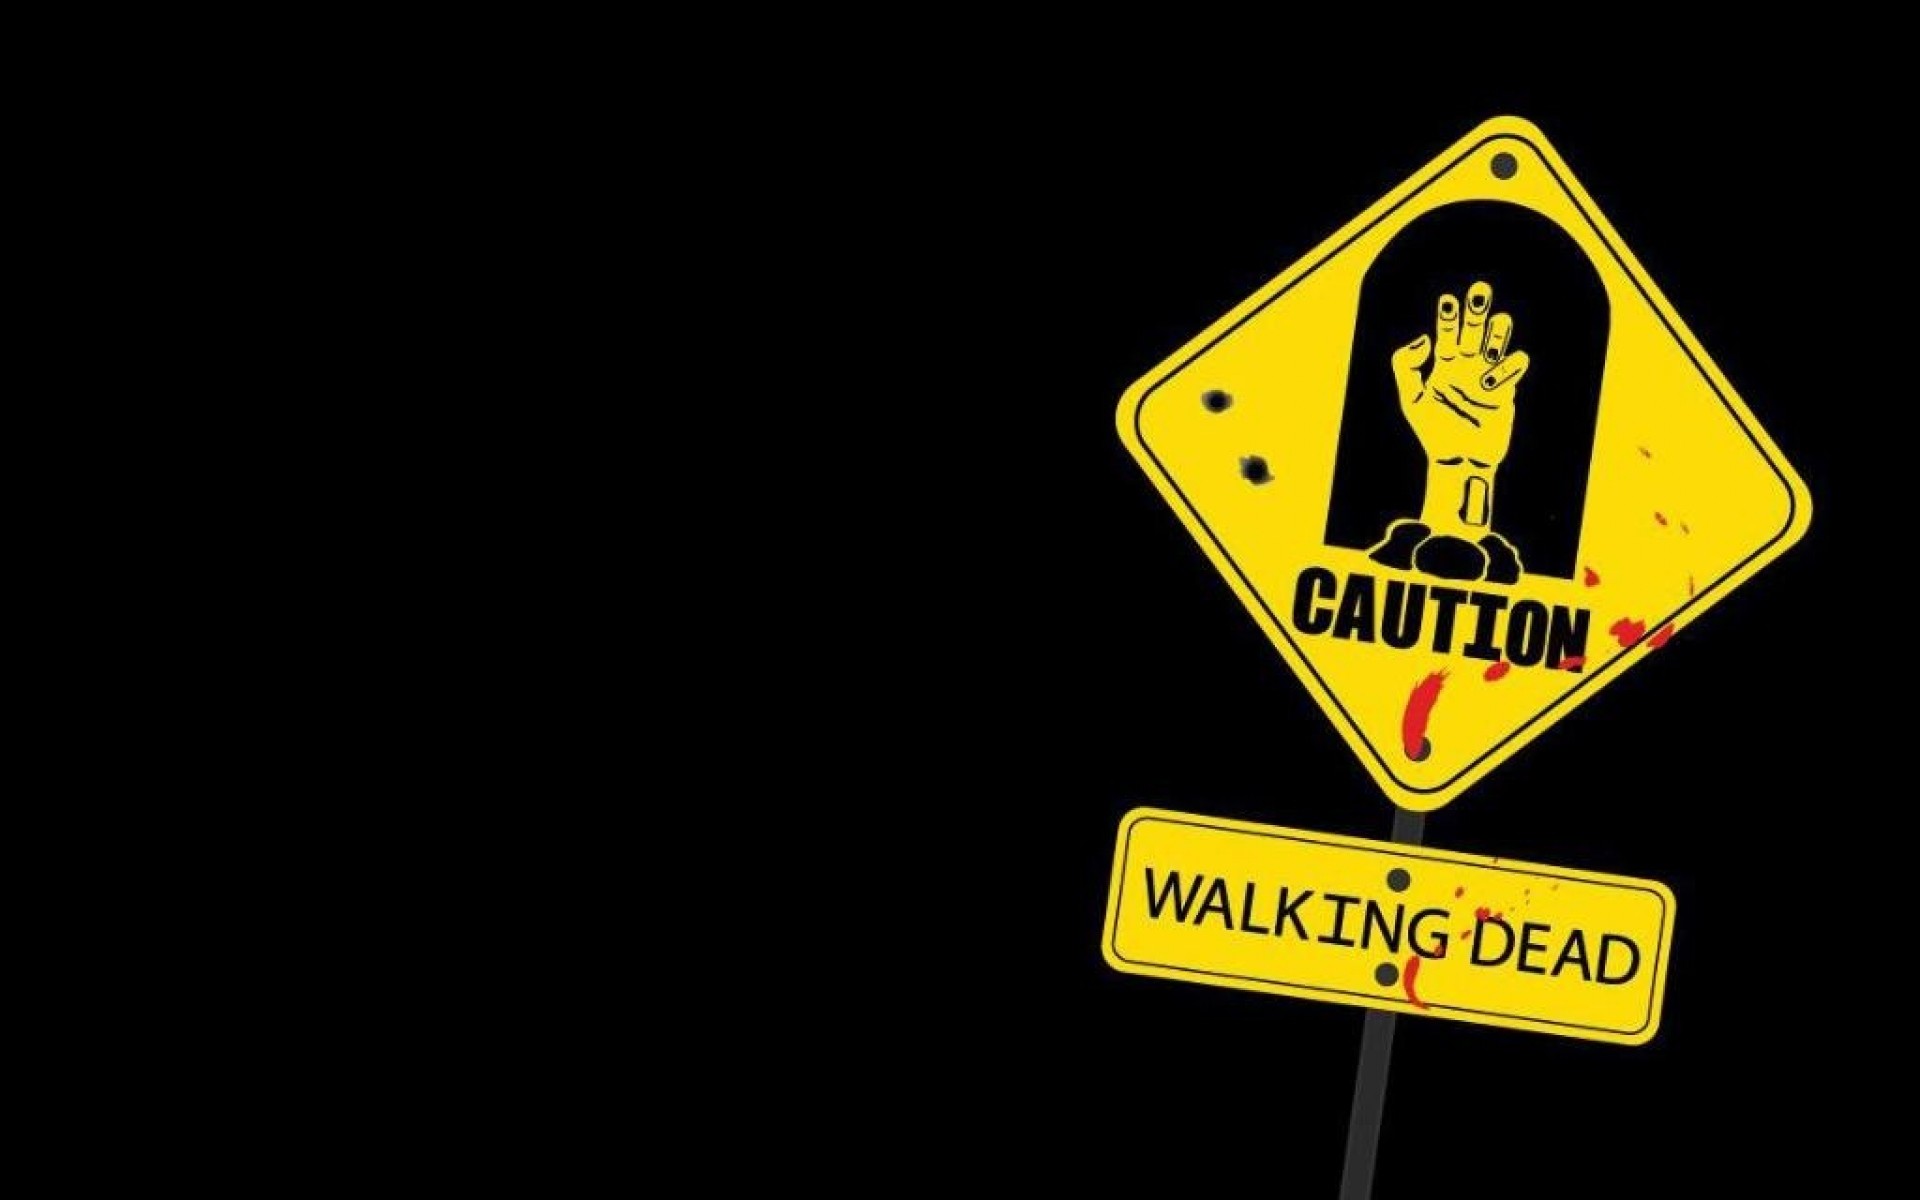 Download the Caution Walking Dead Wallpaper, Caution Walking Dead